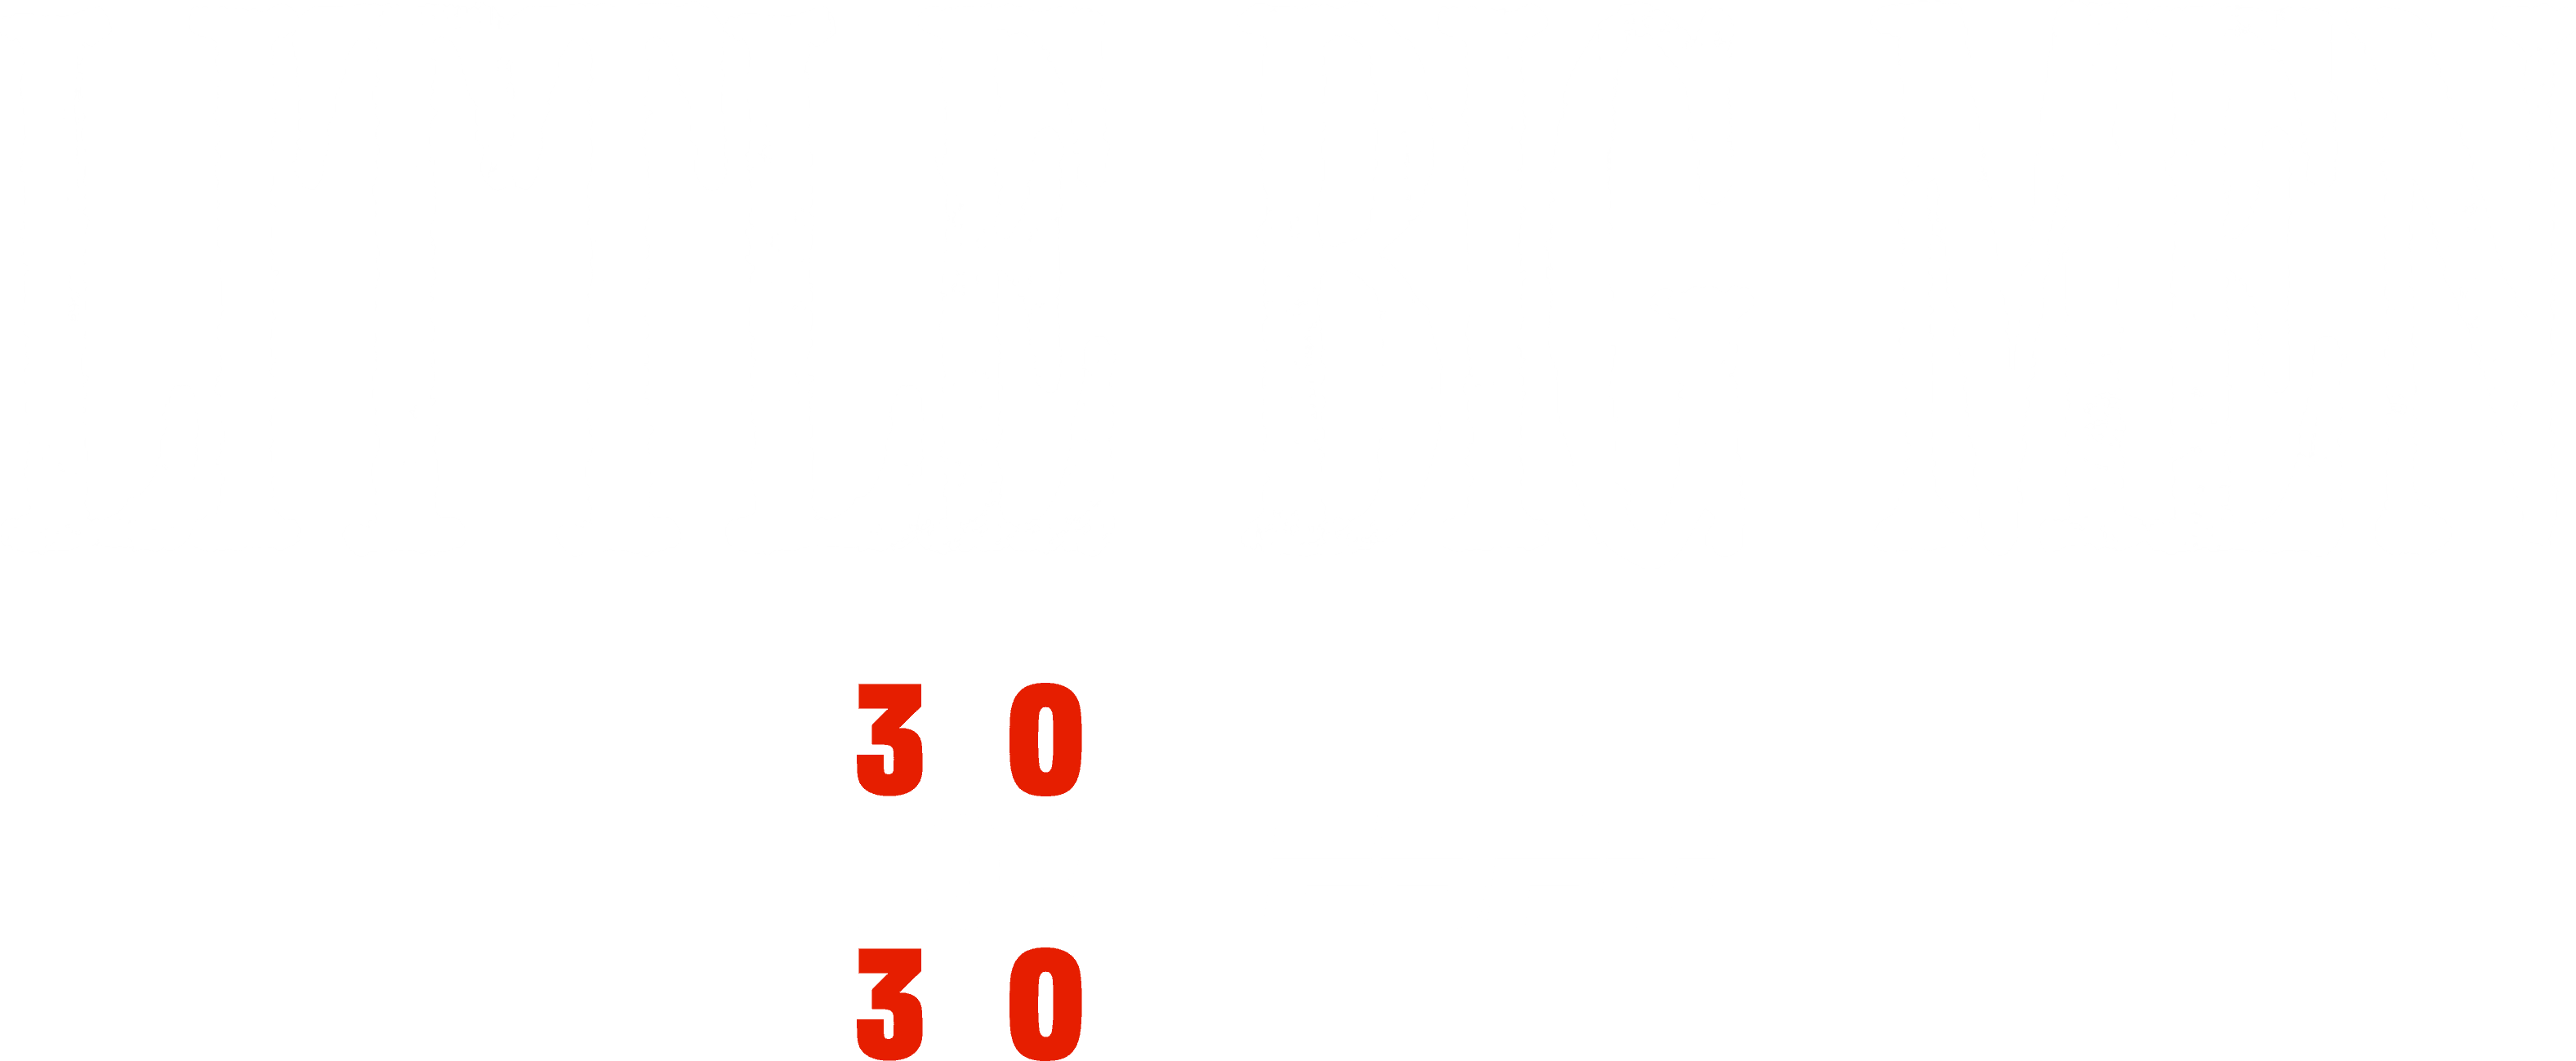 Little Big Men logo